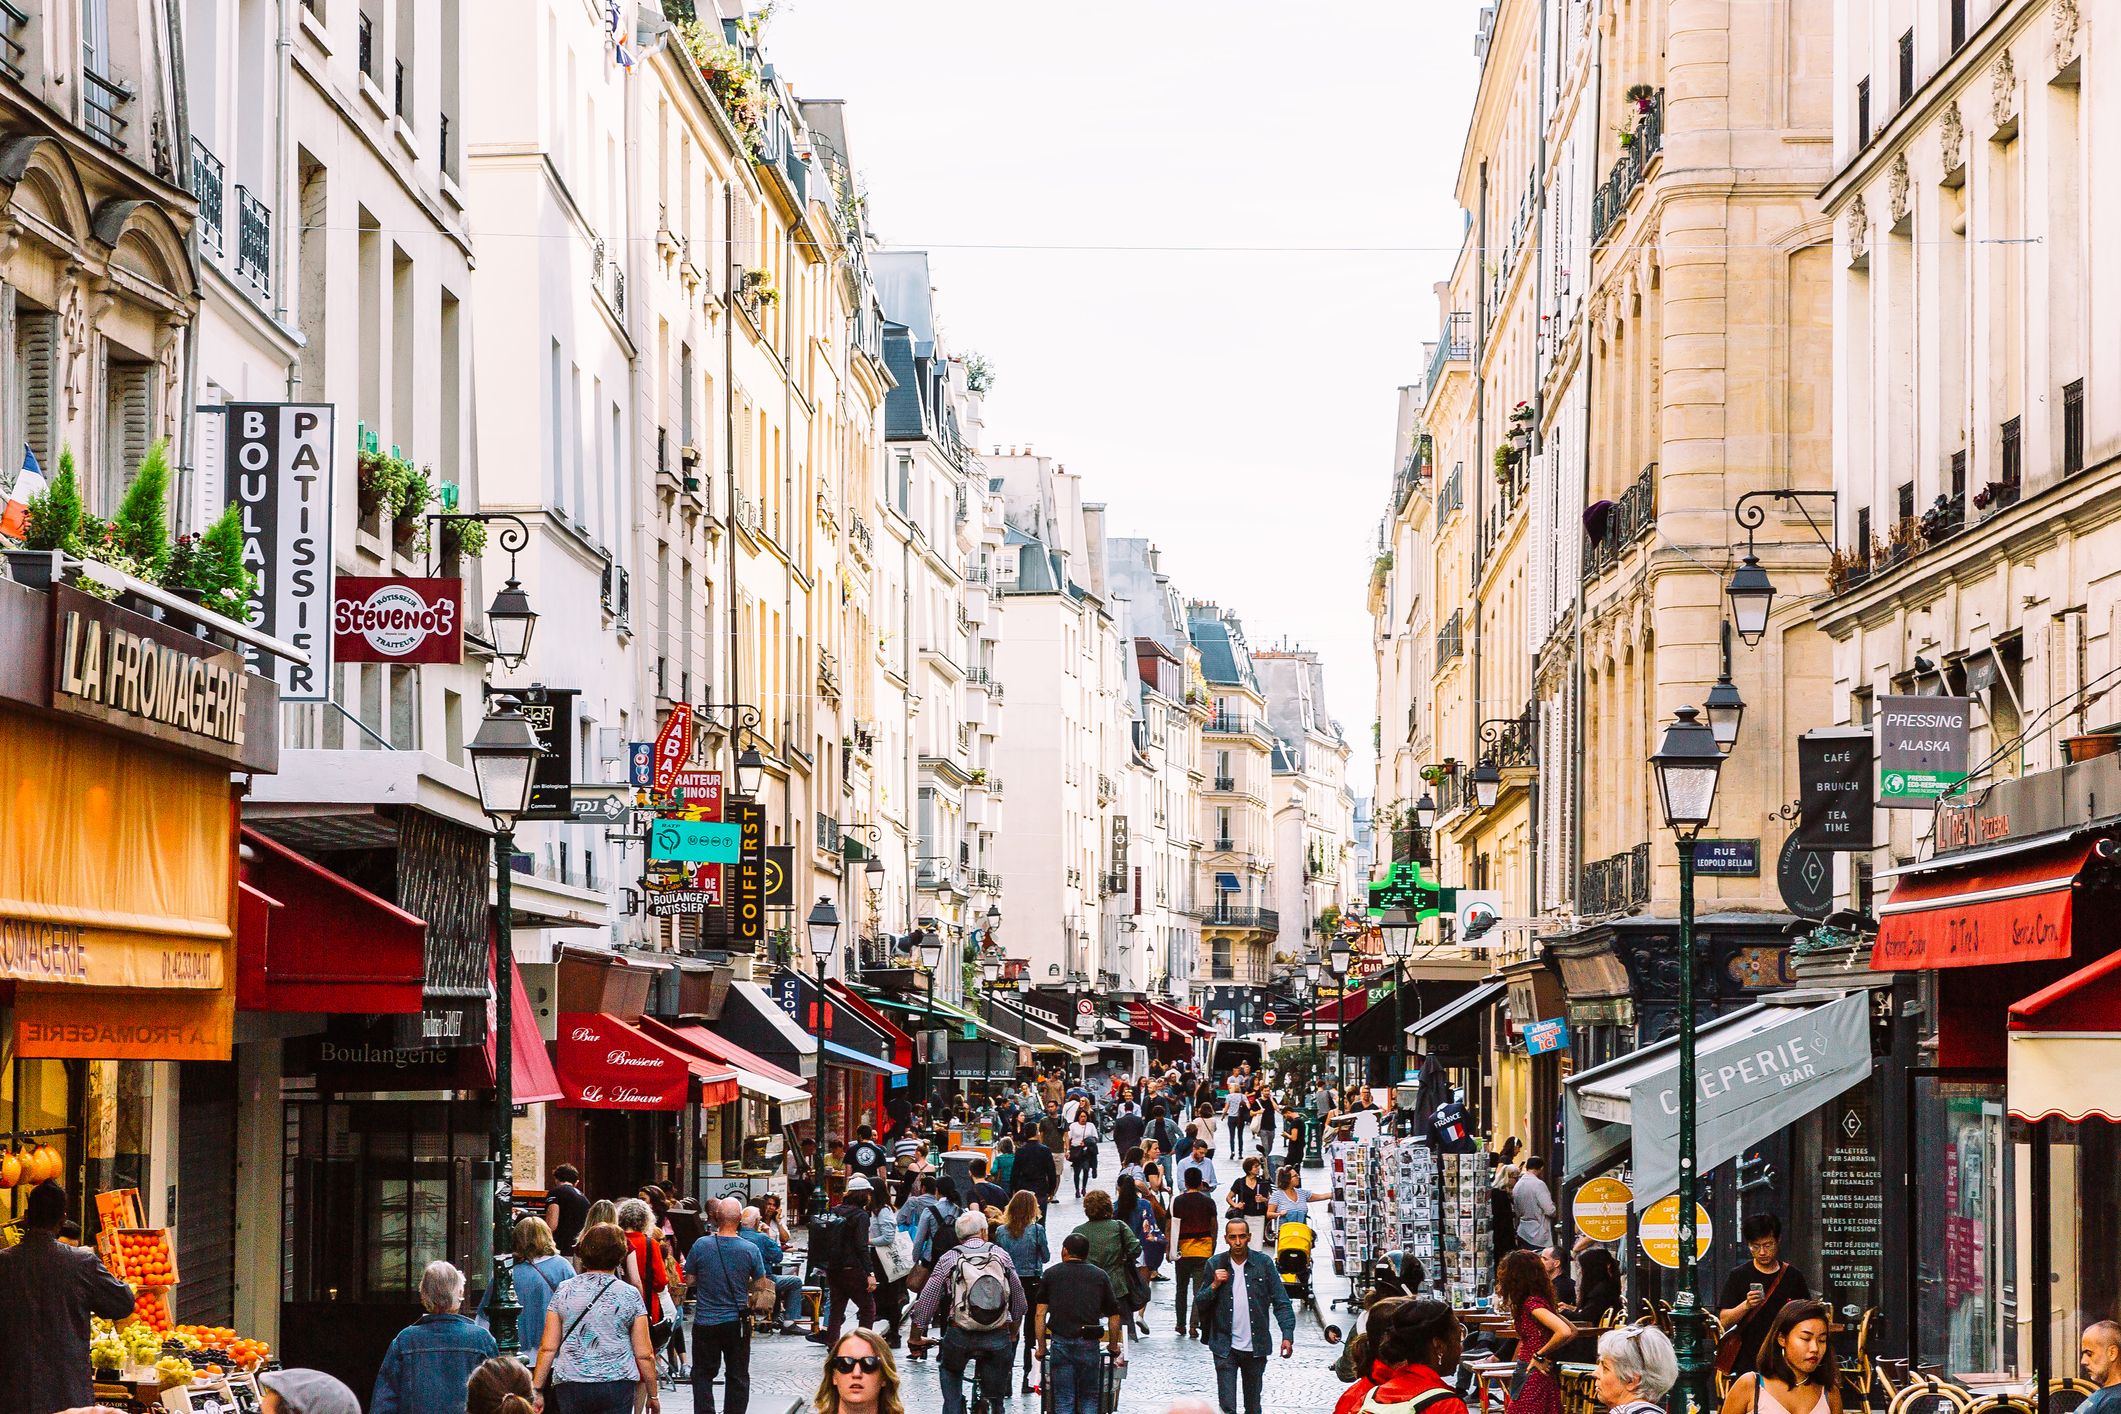 Crowds of people at Rue Montorgueil pedestrian street in Paris, France